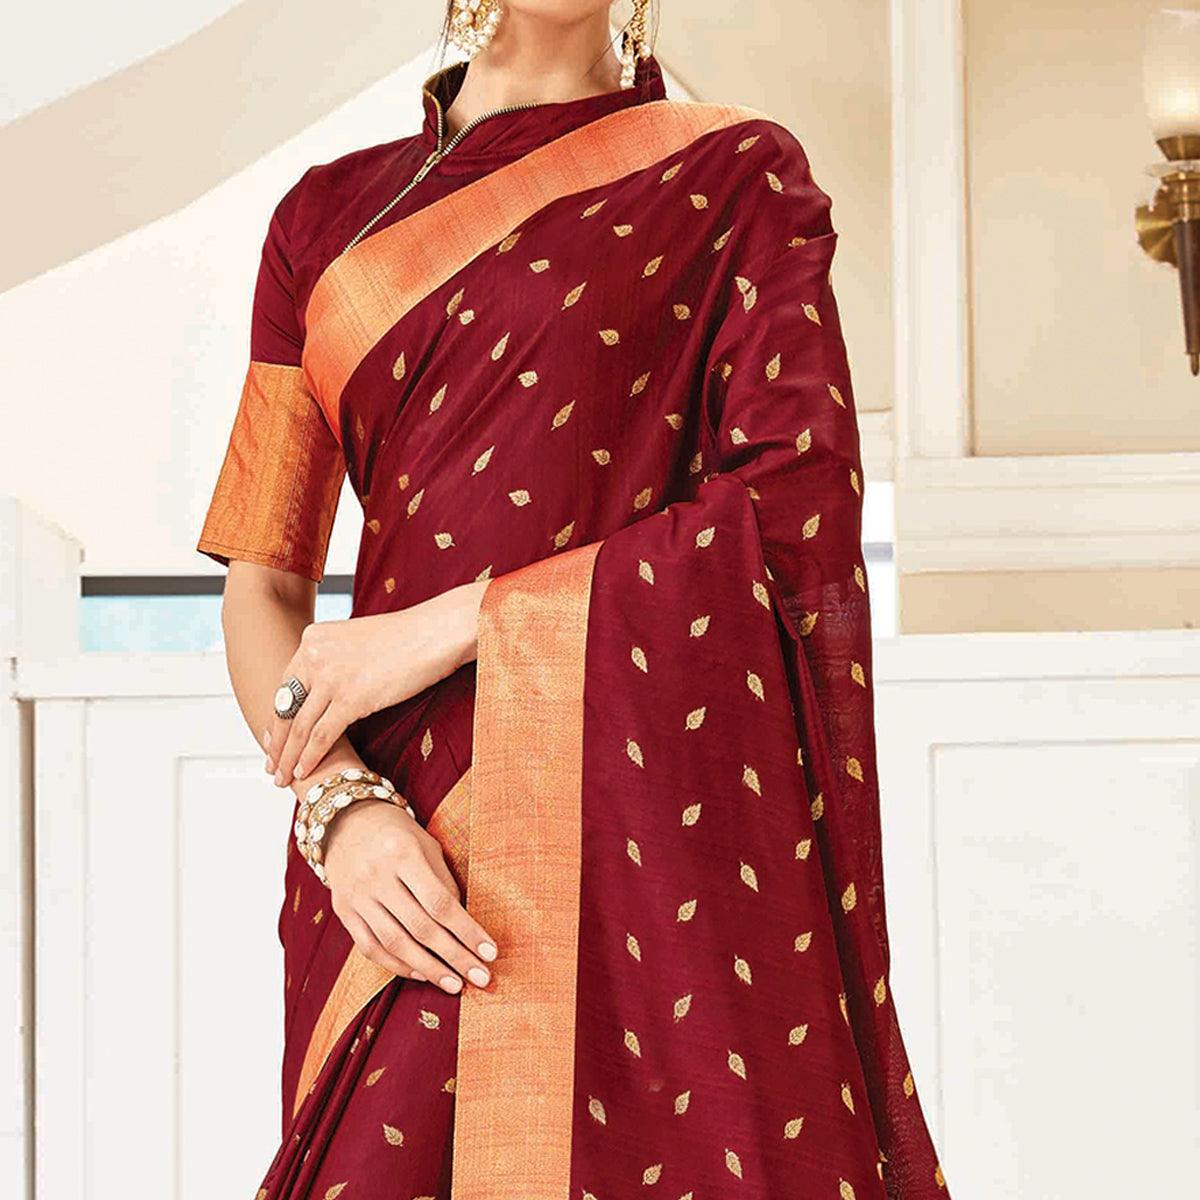 Charming Wine Colored Festive Wear Woven Handloom Silk Saree With Tassels - Peachmode